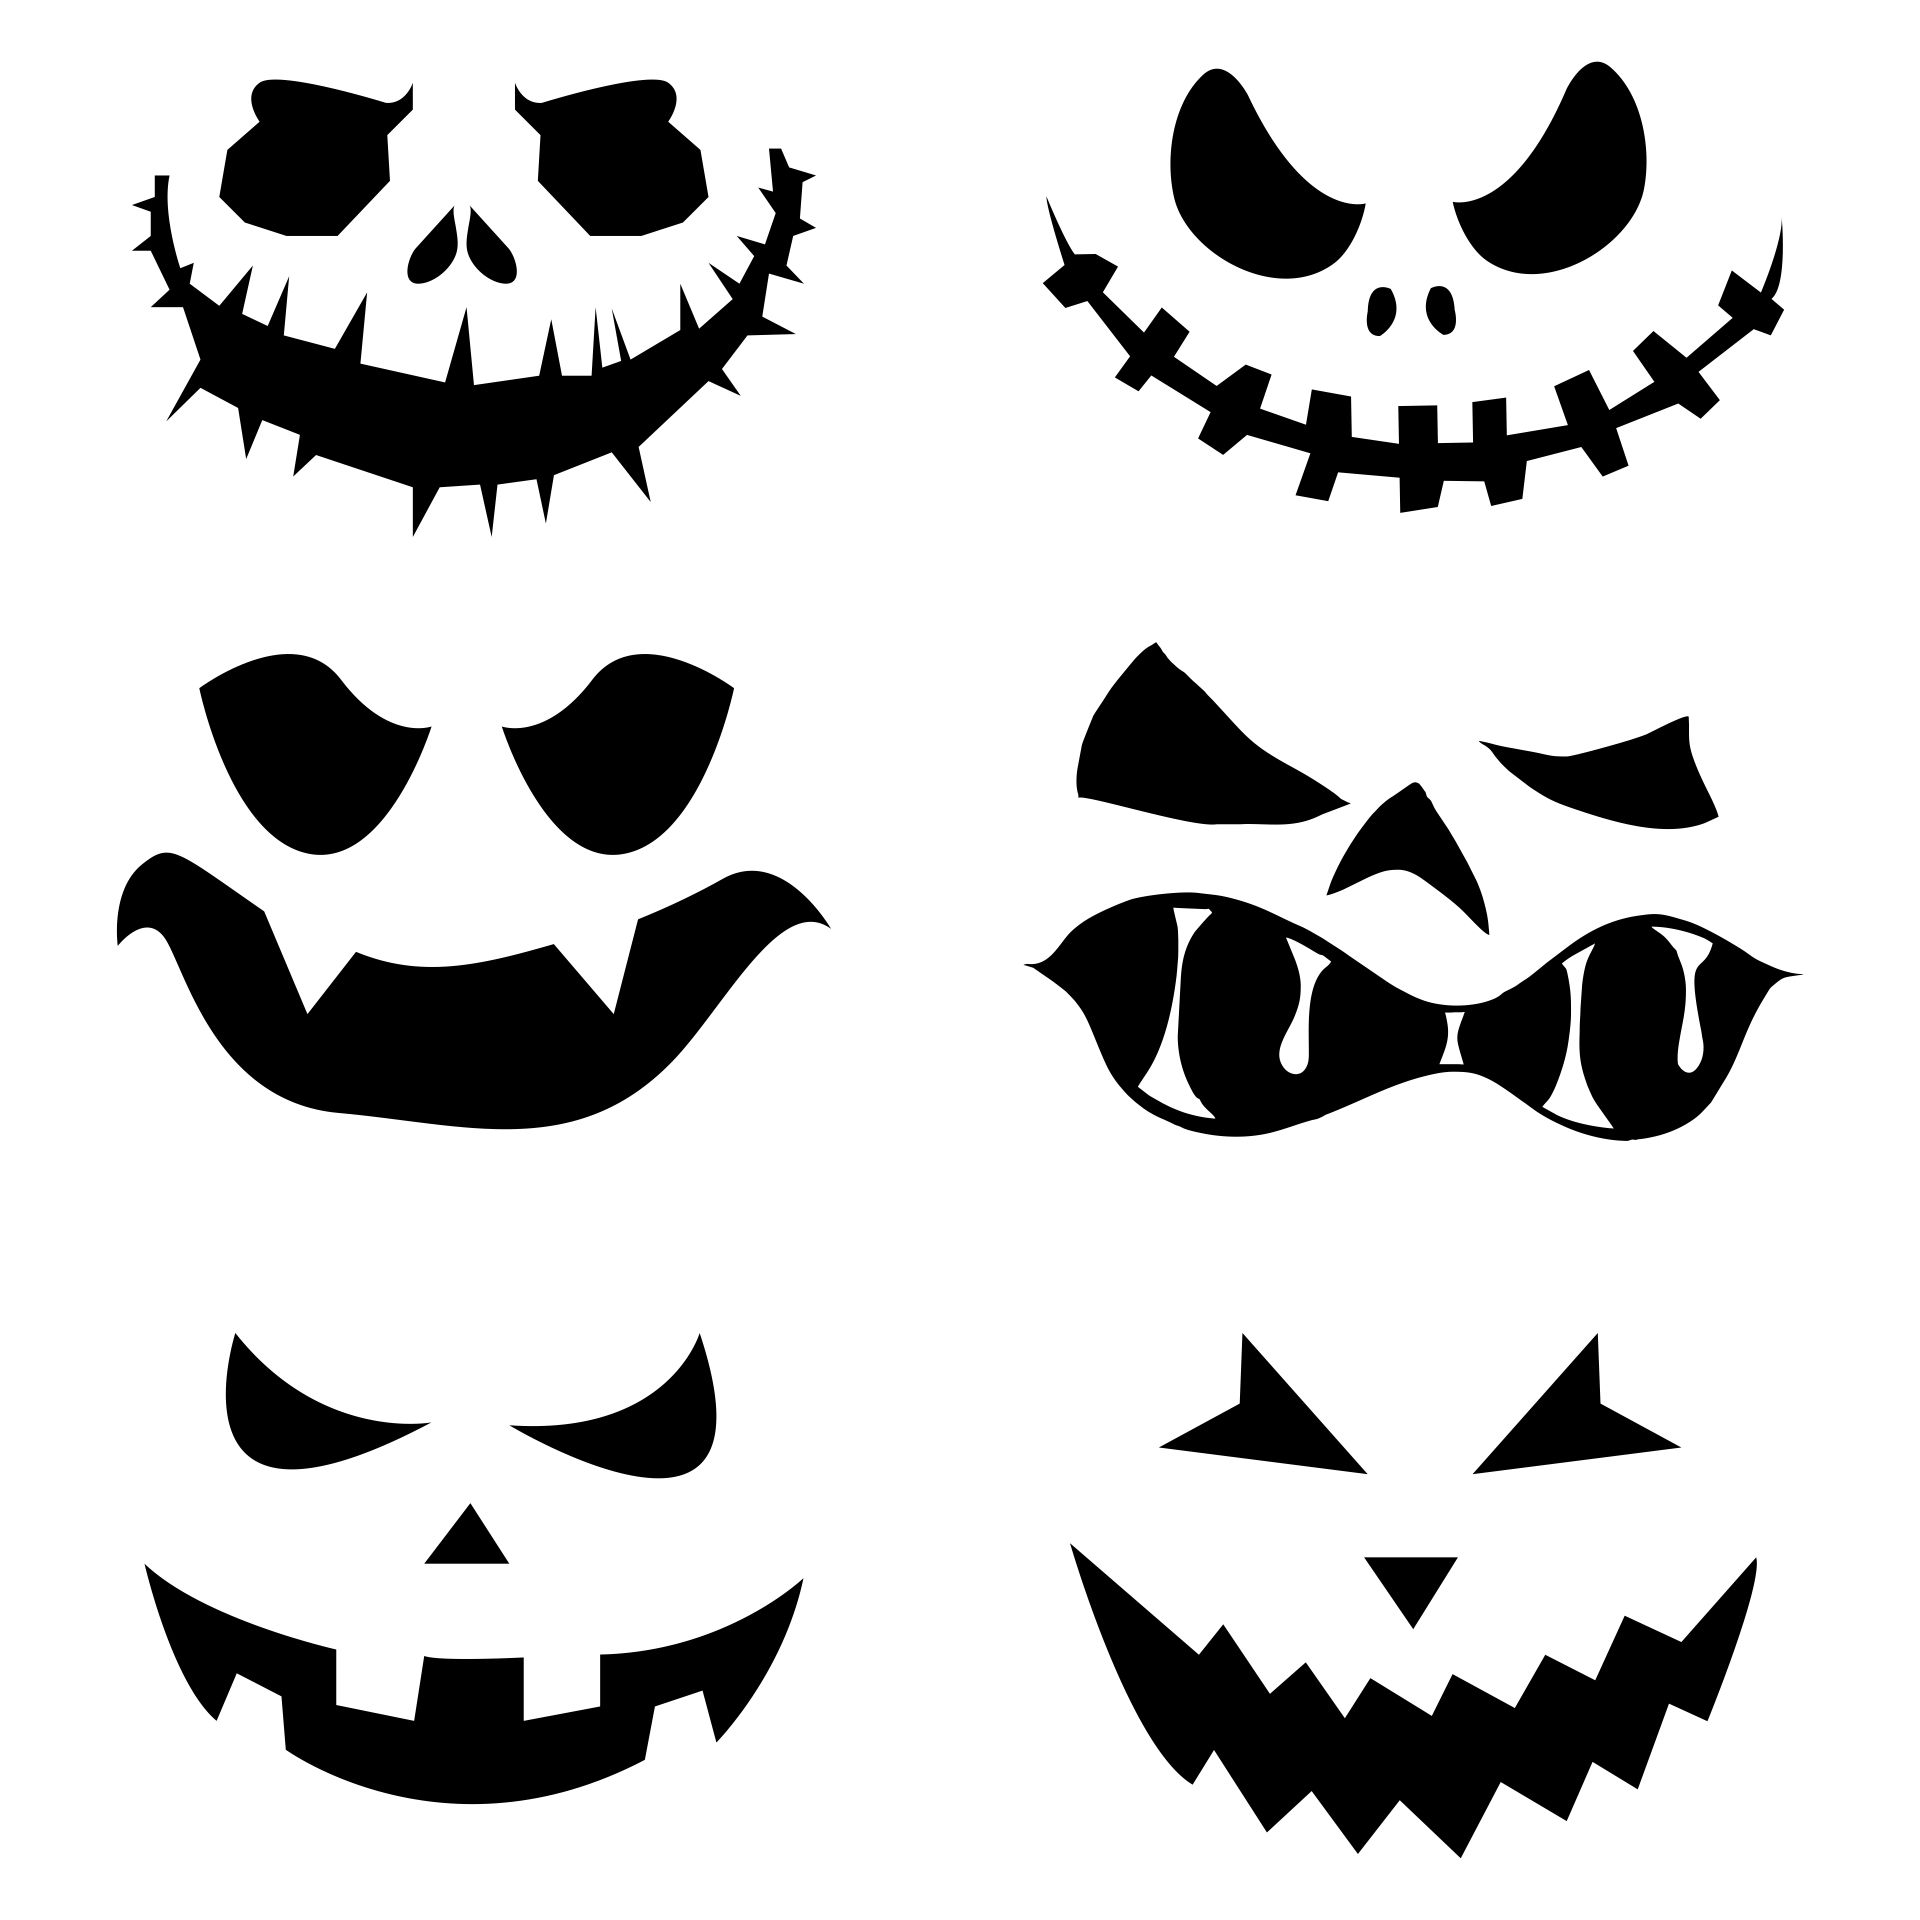 Scary Pumpkin Carving Pattern Angry Jack-o-lantern Printable